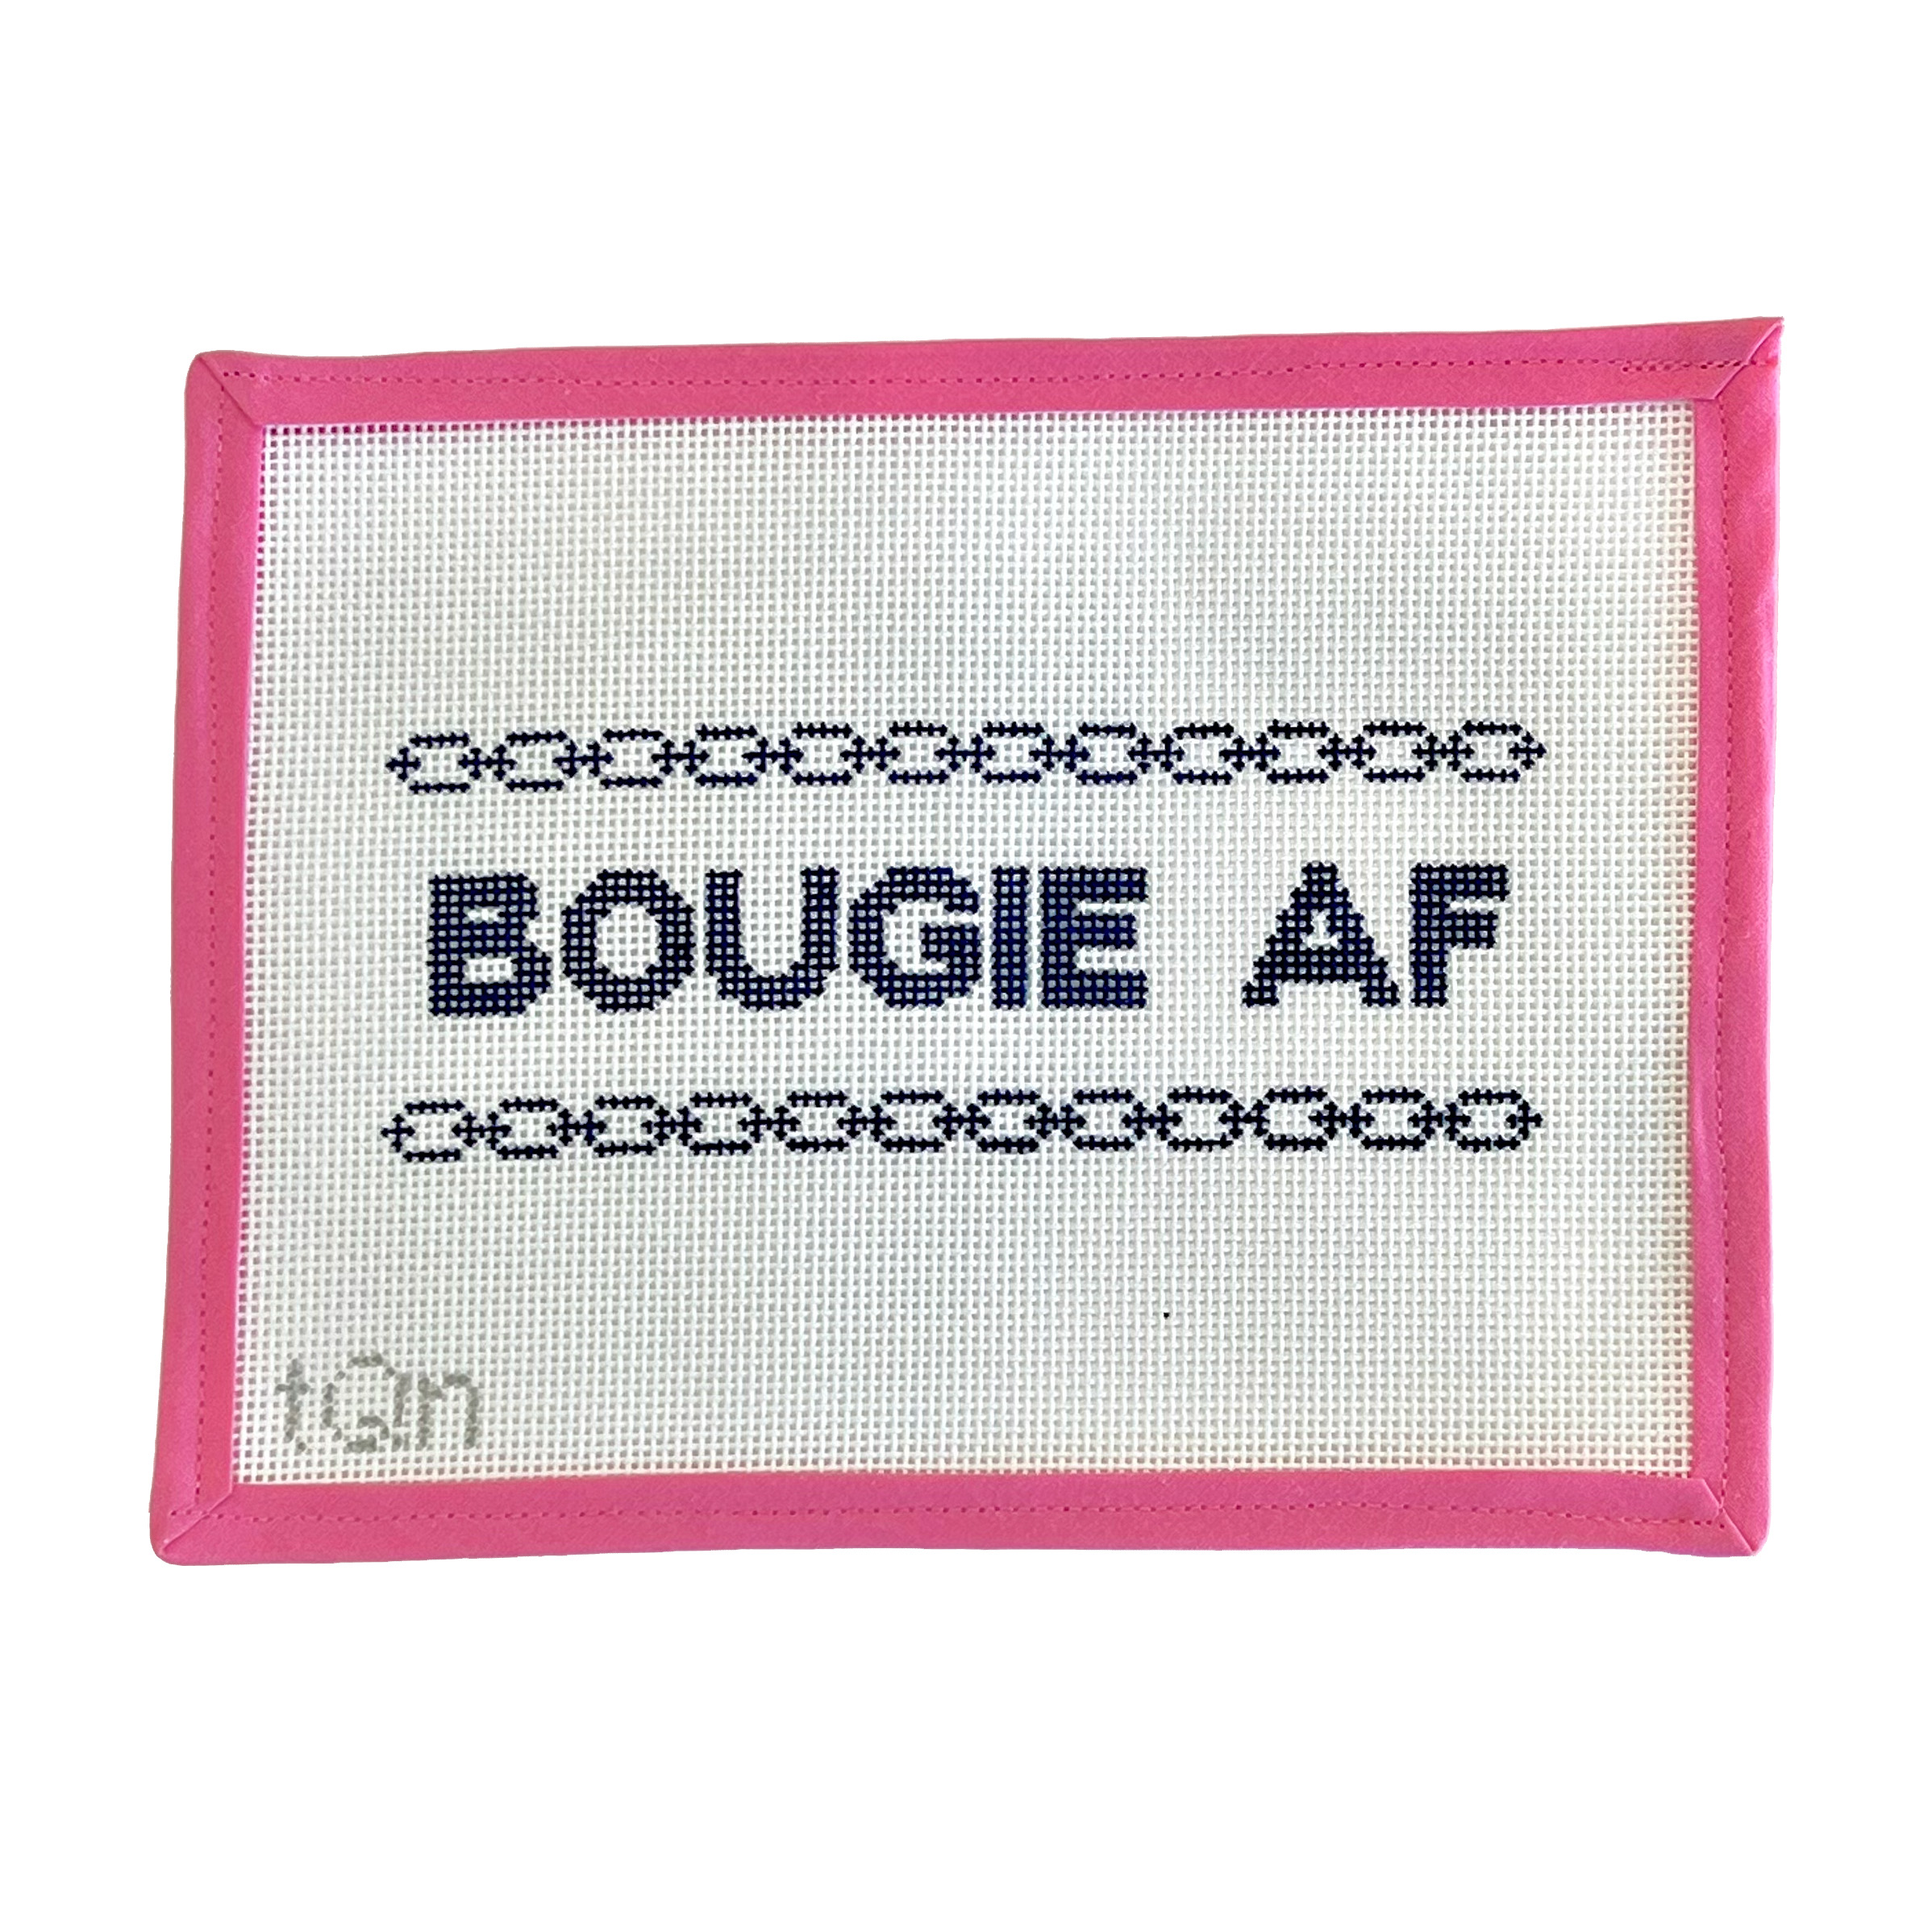 Bougie AF - SBT Stitches